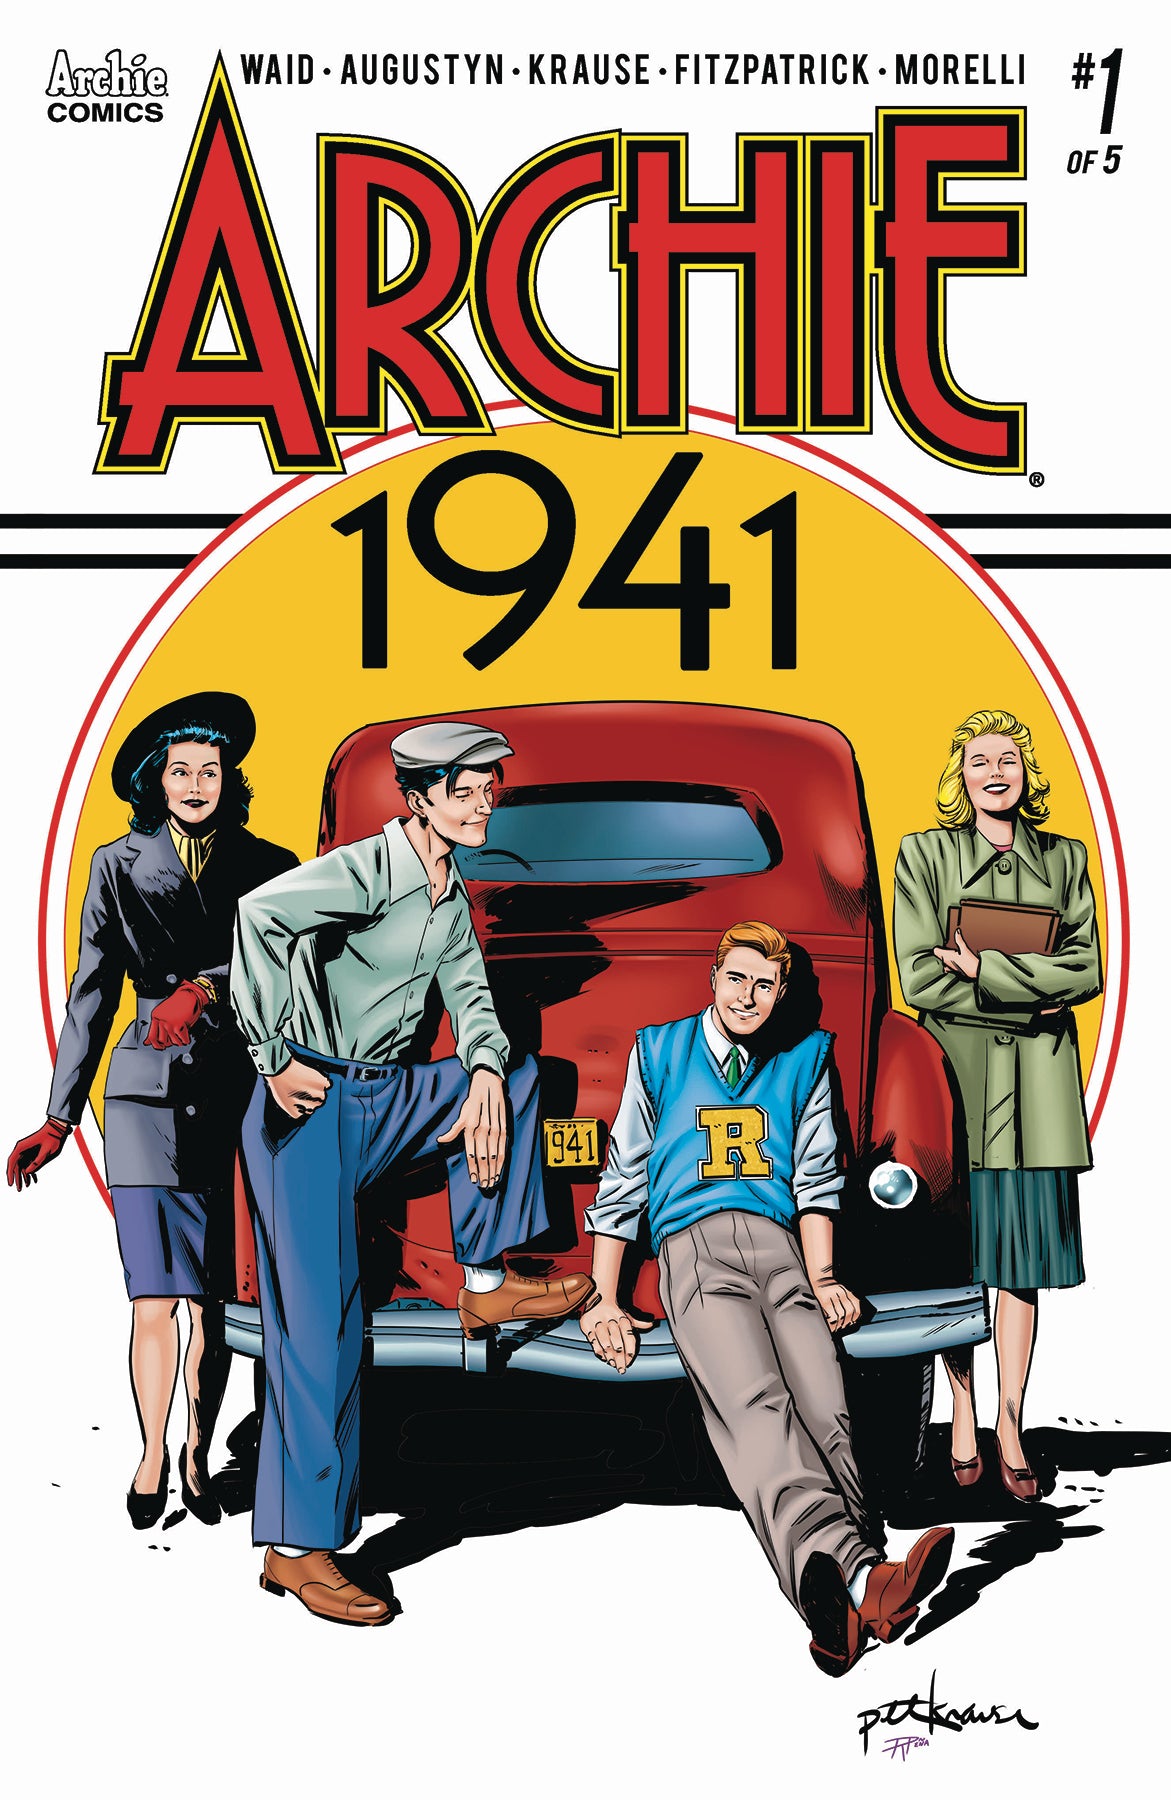 ARCHIE 1941 #1 (OF 5) CVR A KRAUSE COVER